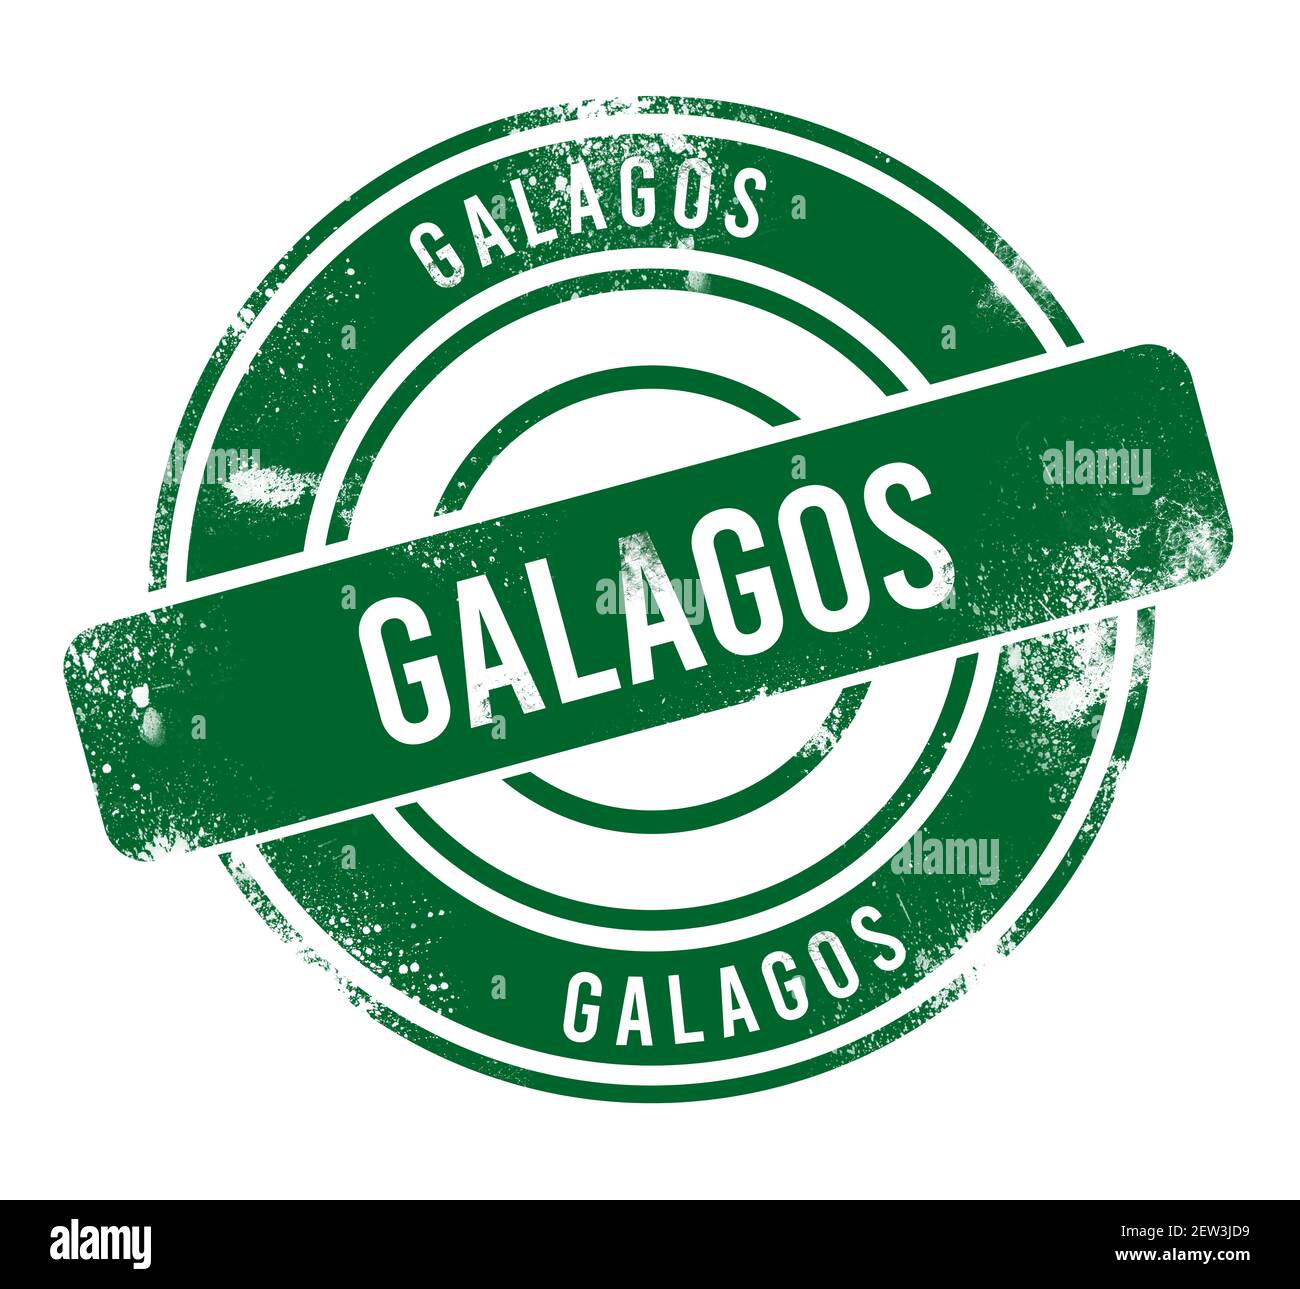 galagos - green round grunge button, stamp Stock Photo